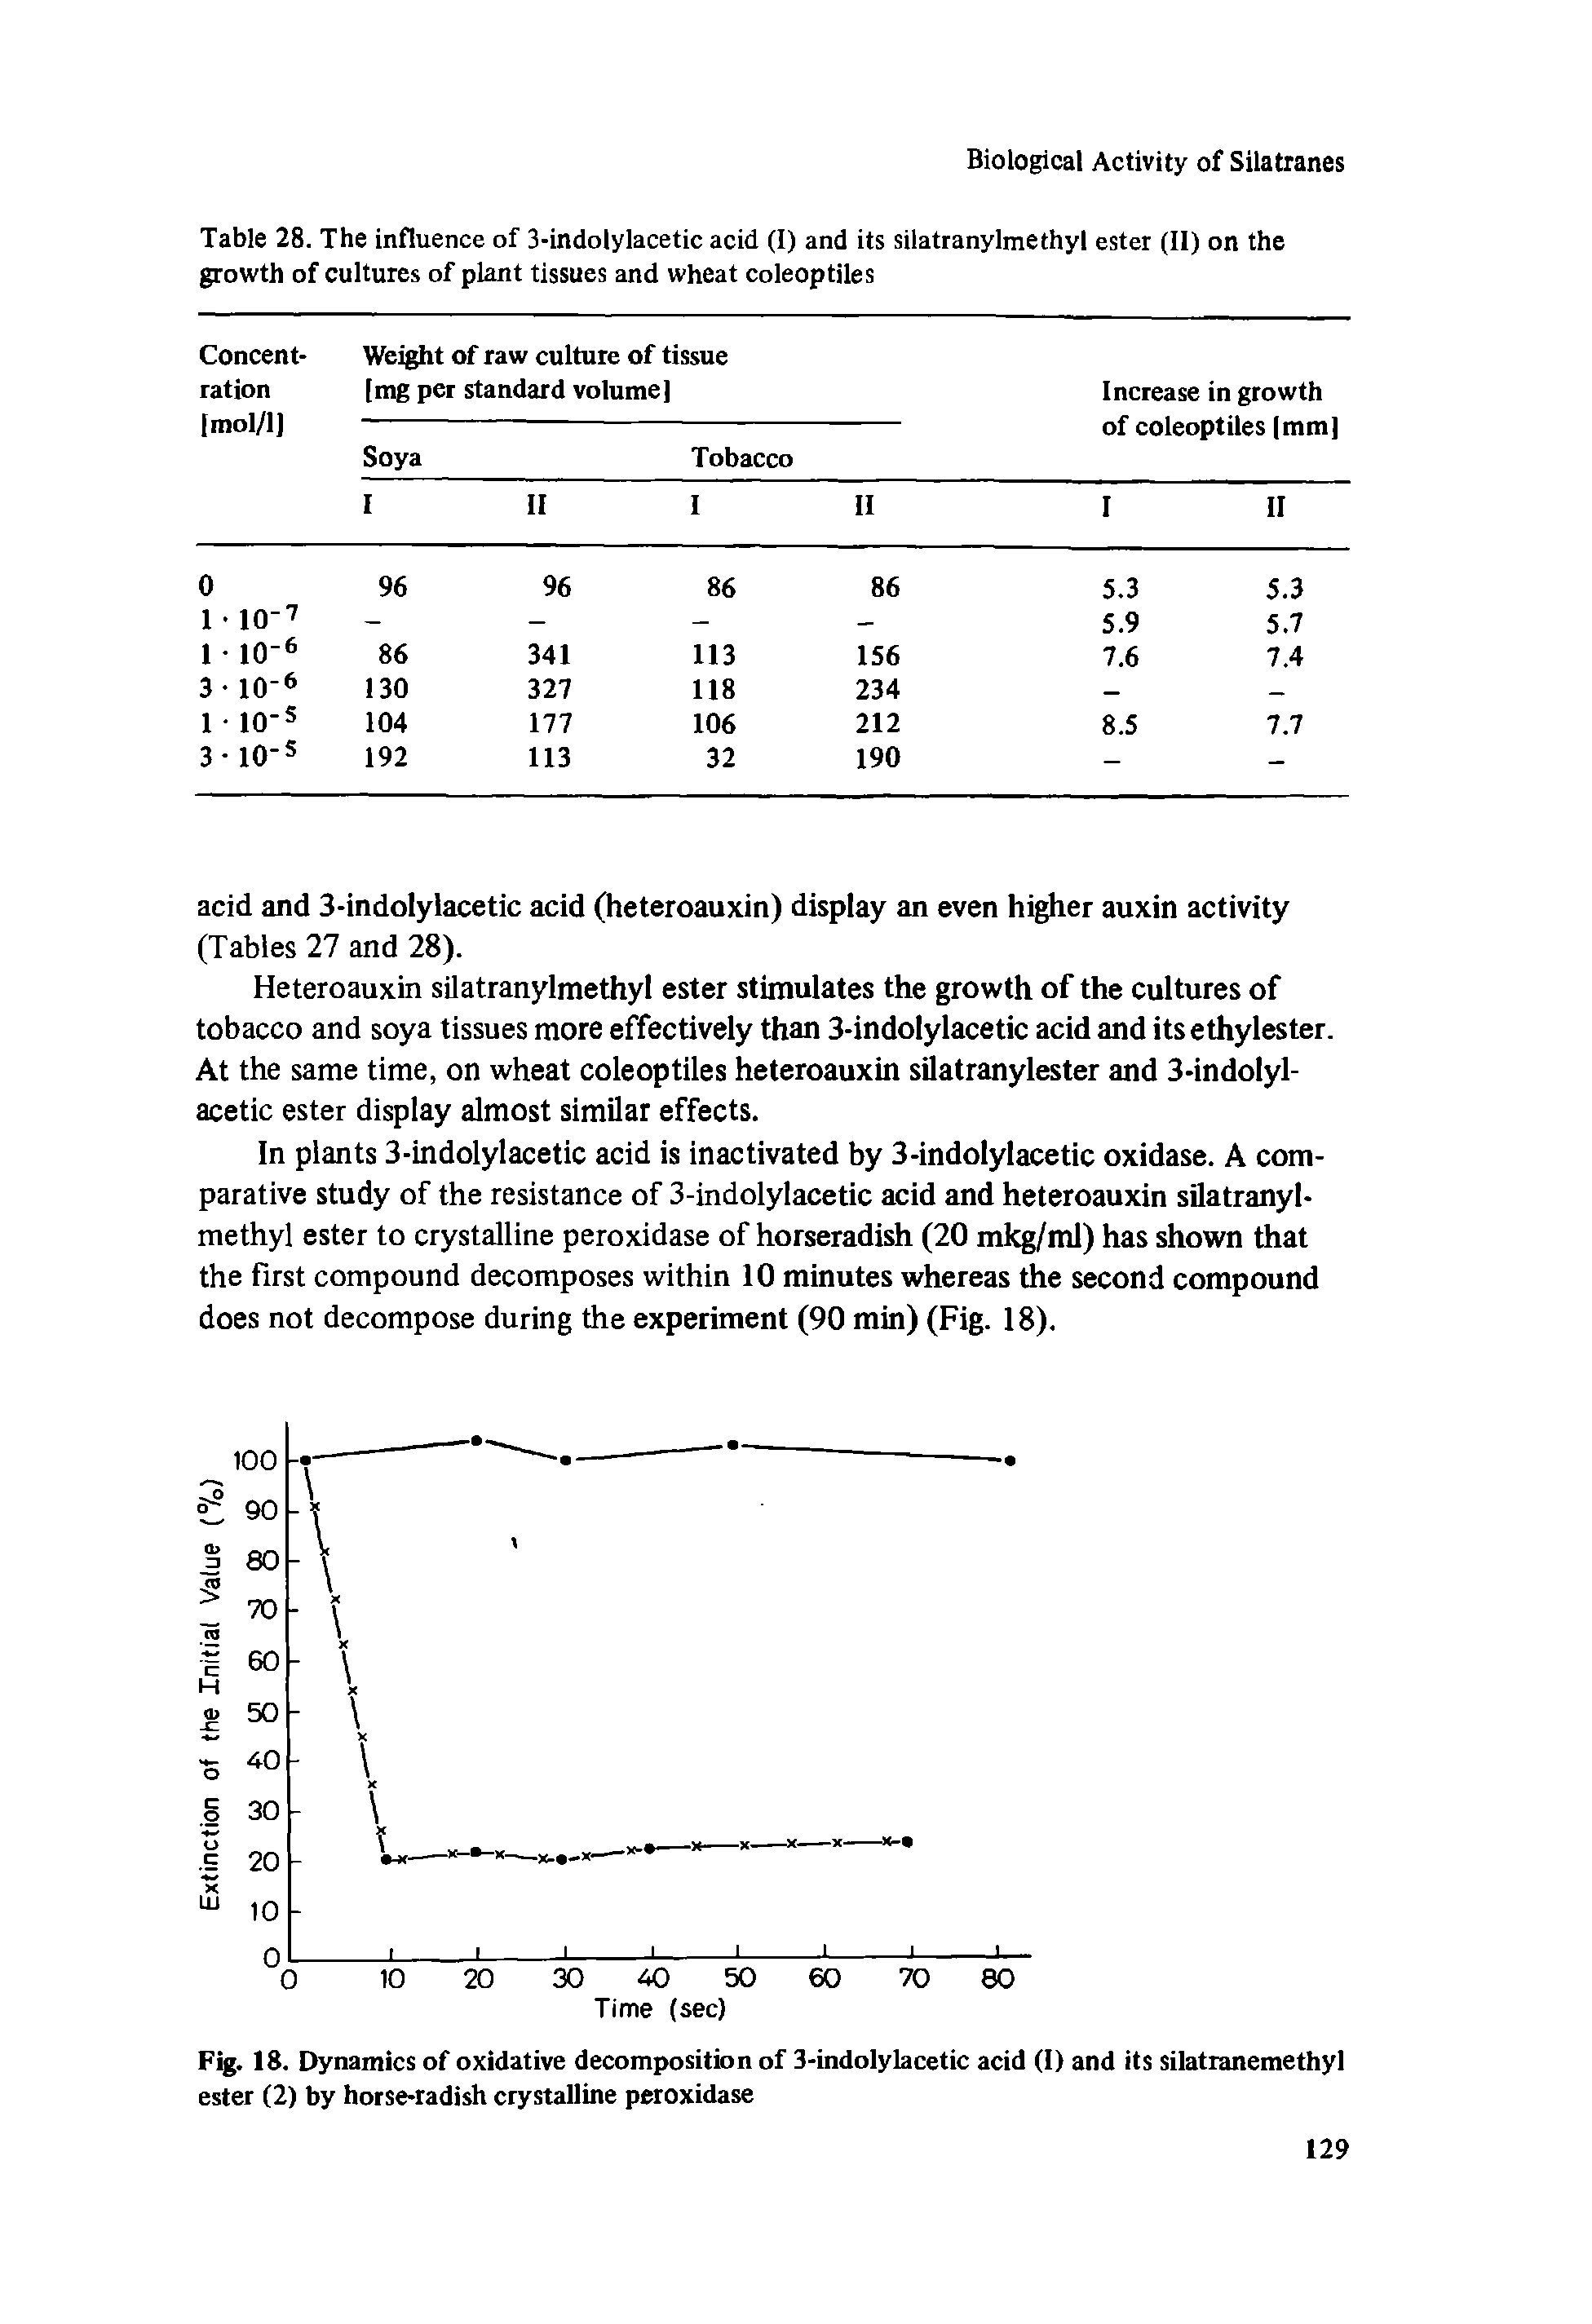 Fig. 18. Dynamics of oxidative decomposition of 3-indolylacetic acid (I) and its silatranemethyl ester (2) by horse-radish crystalline peroxidase...